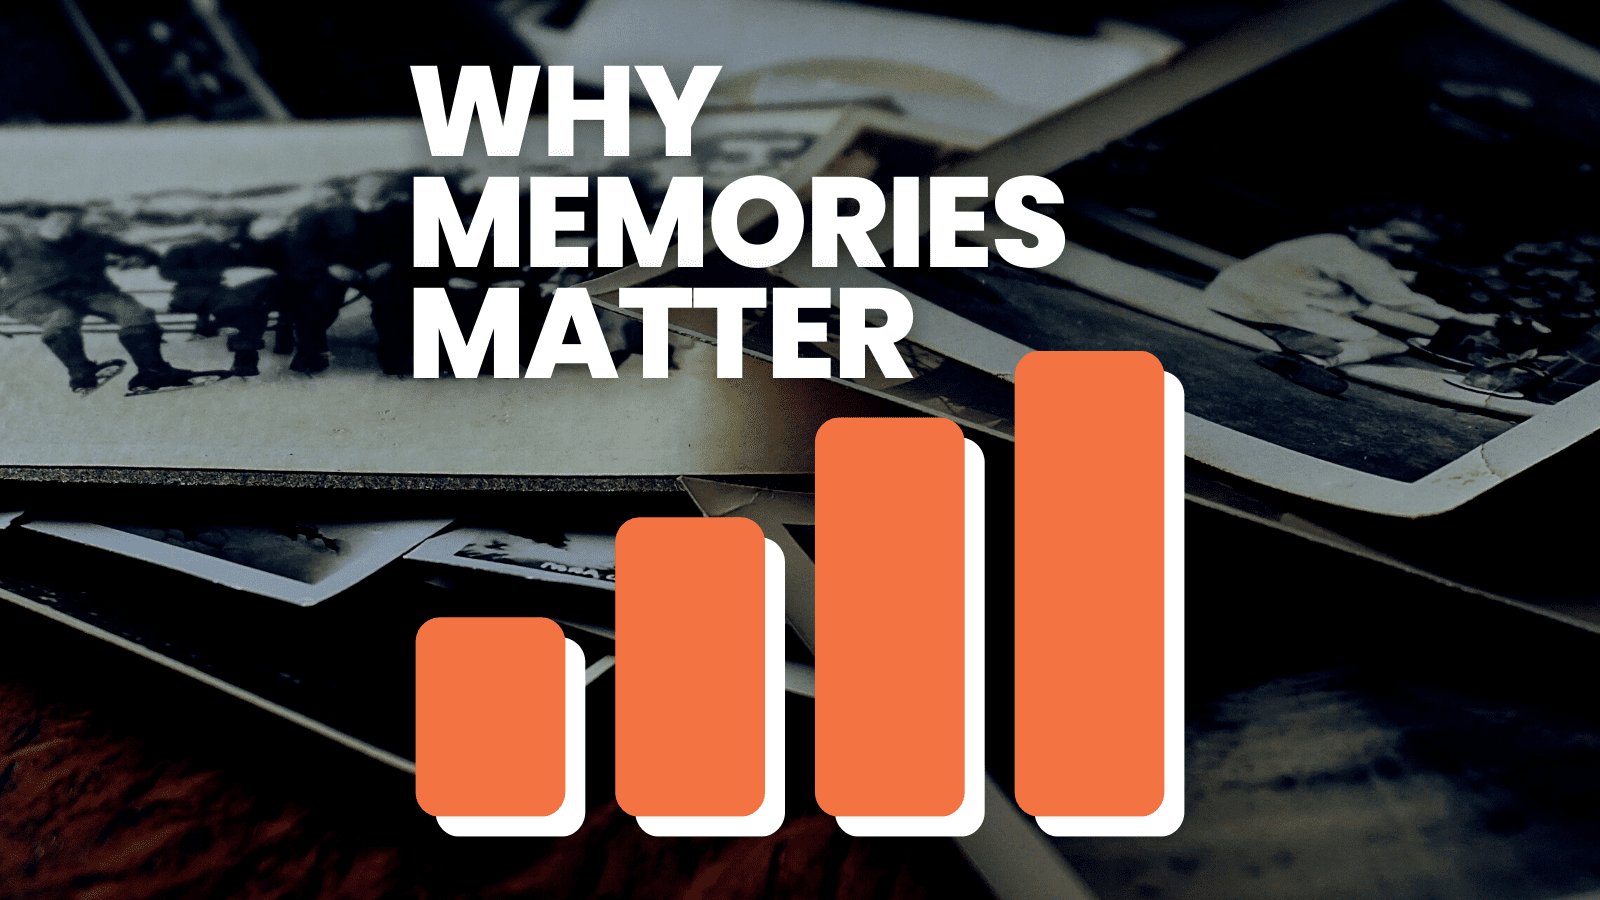 Why memories matter